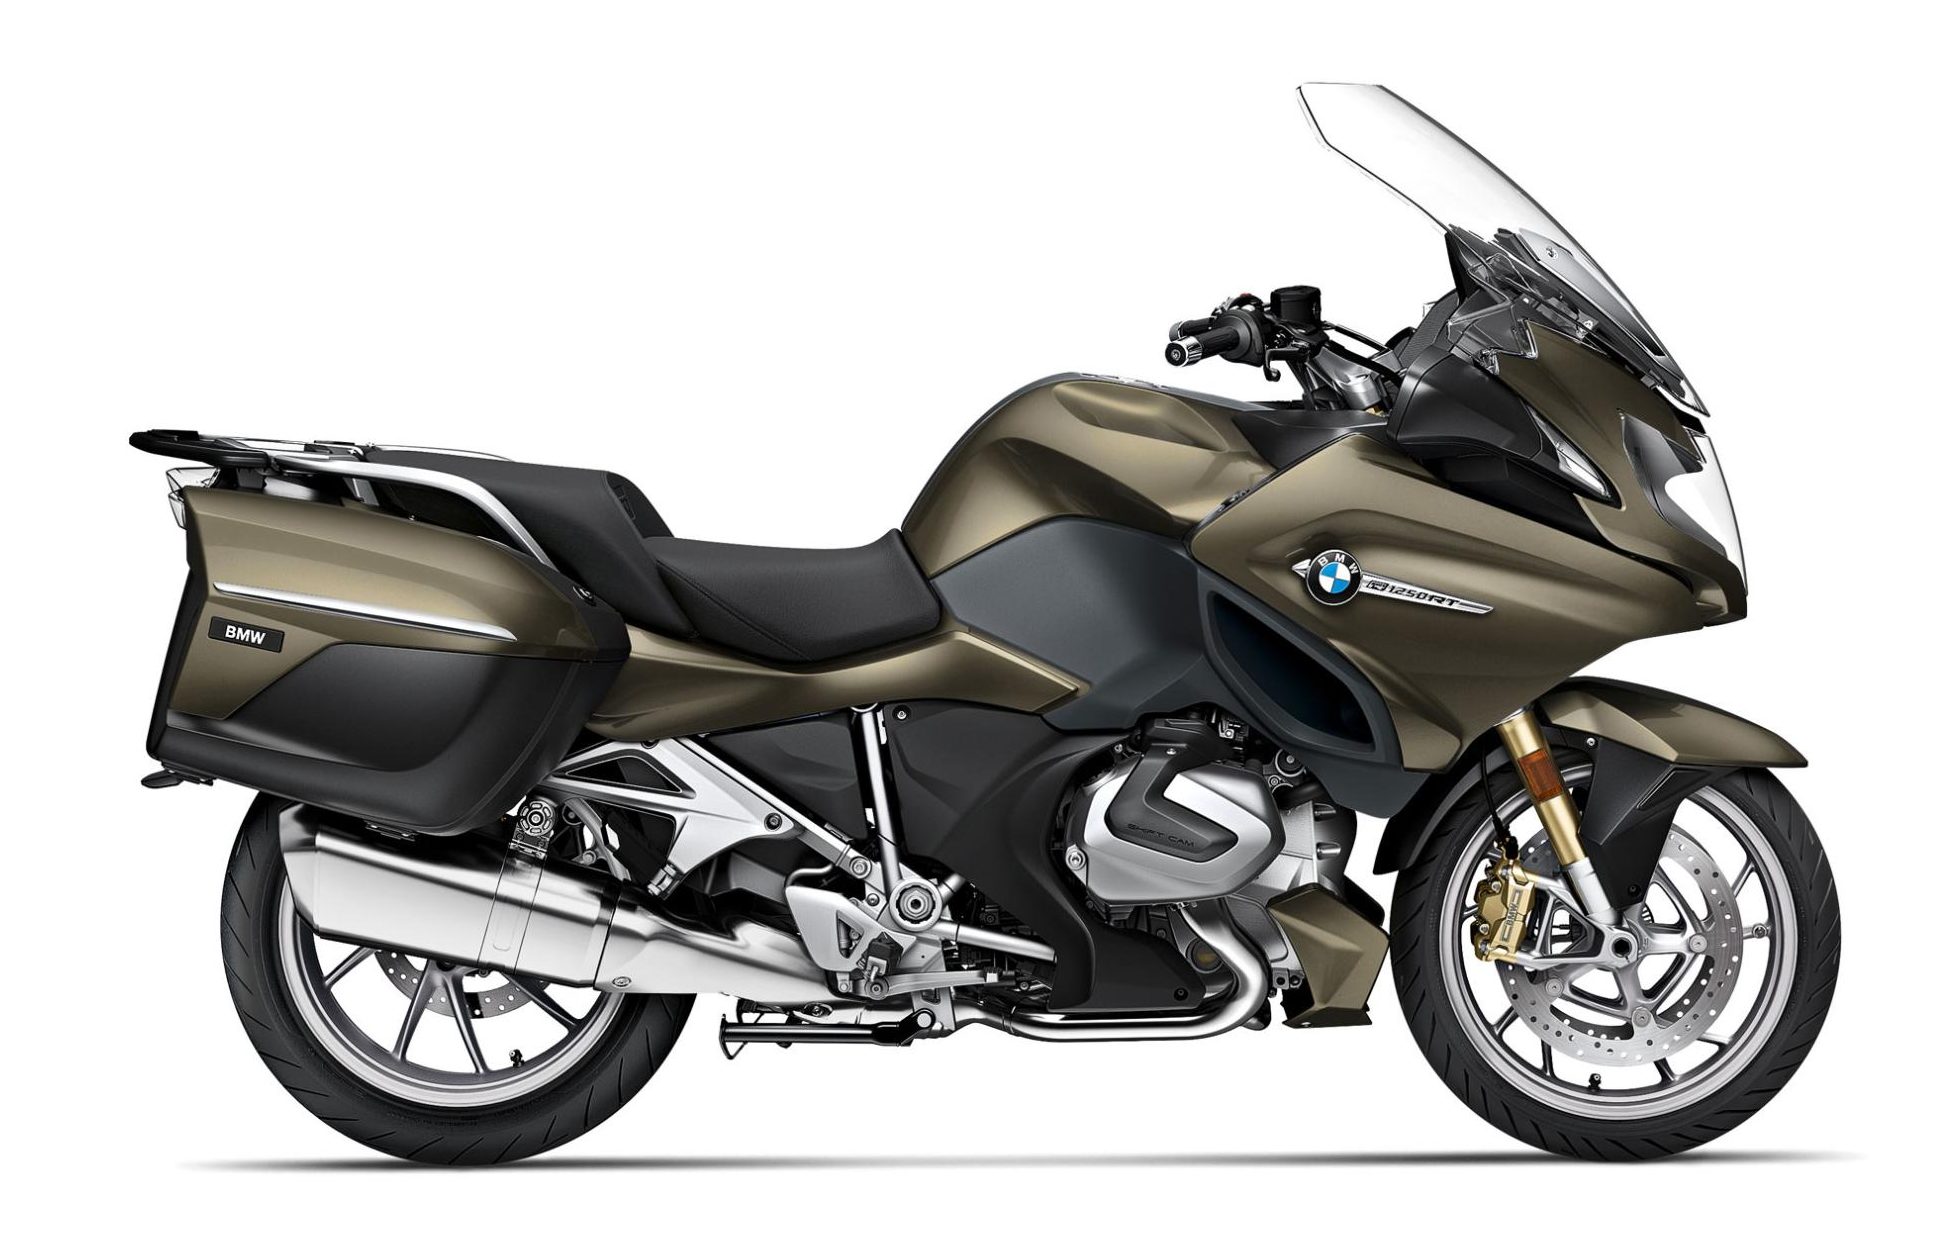 2020 BMW Motorcycle Model List | webBikeWorld